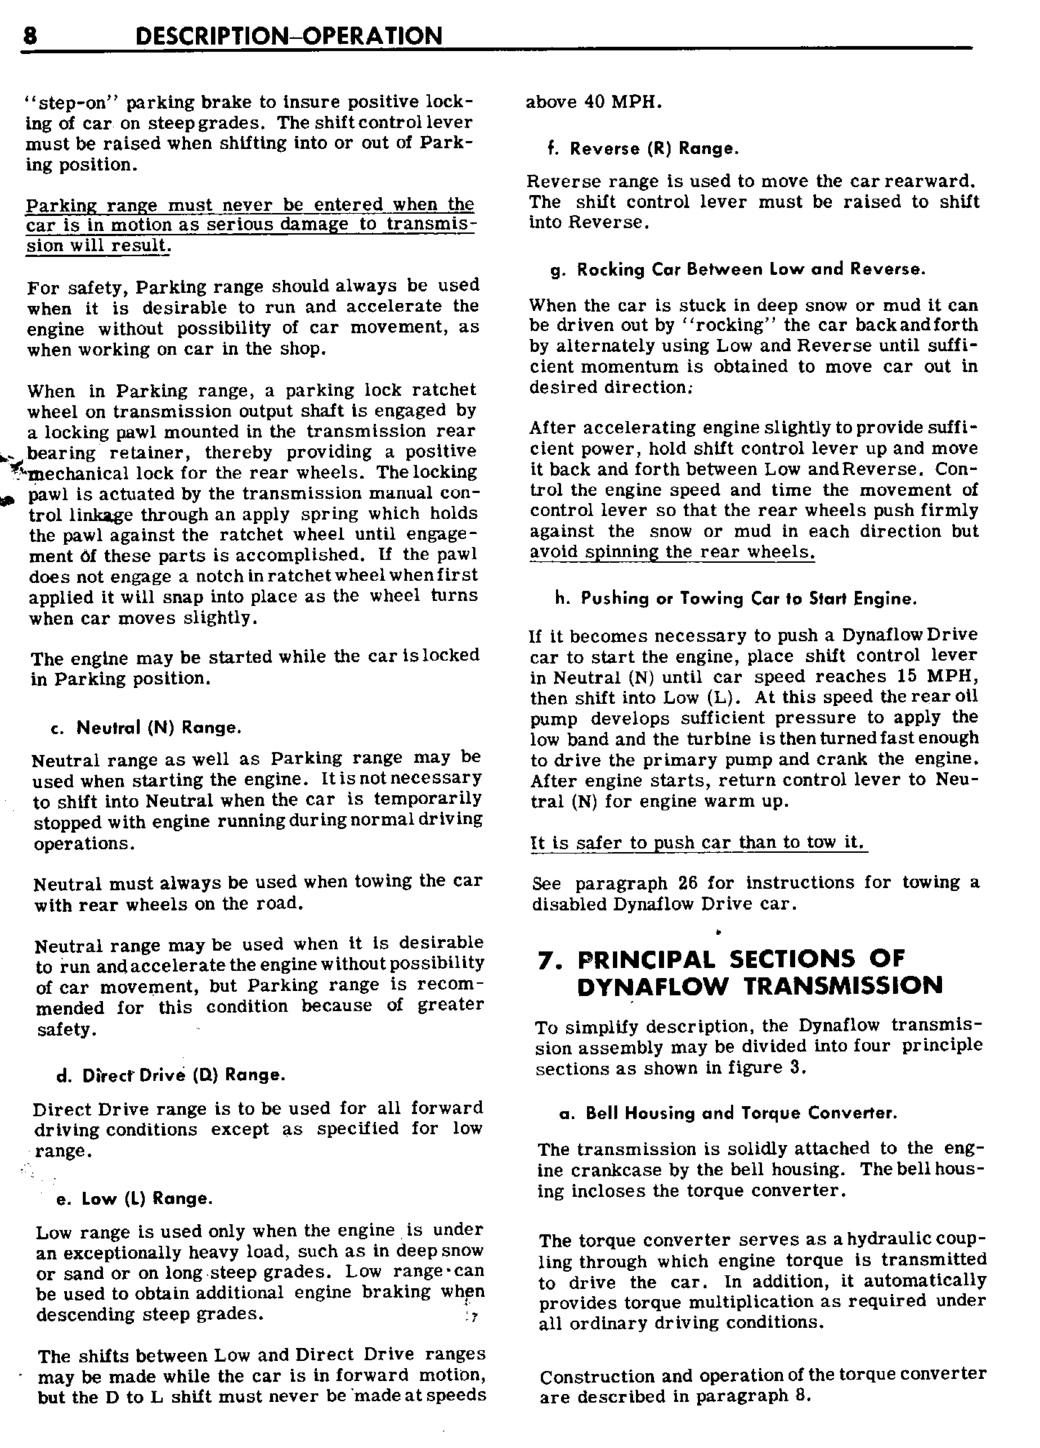 n_02 1948 Buick Transmission - Descr & Oper-002-002.jpg